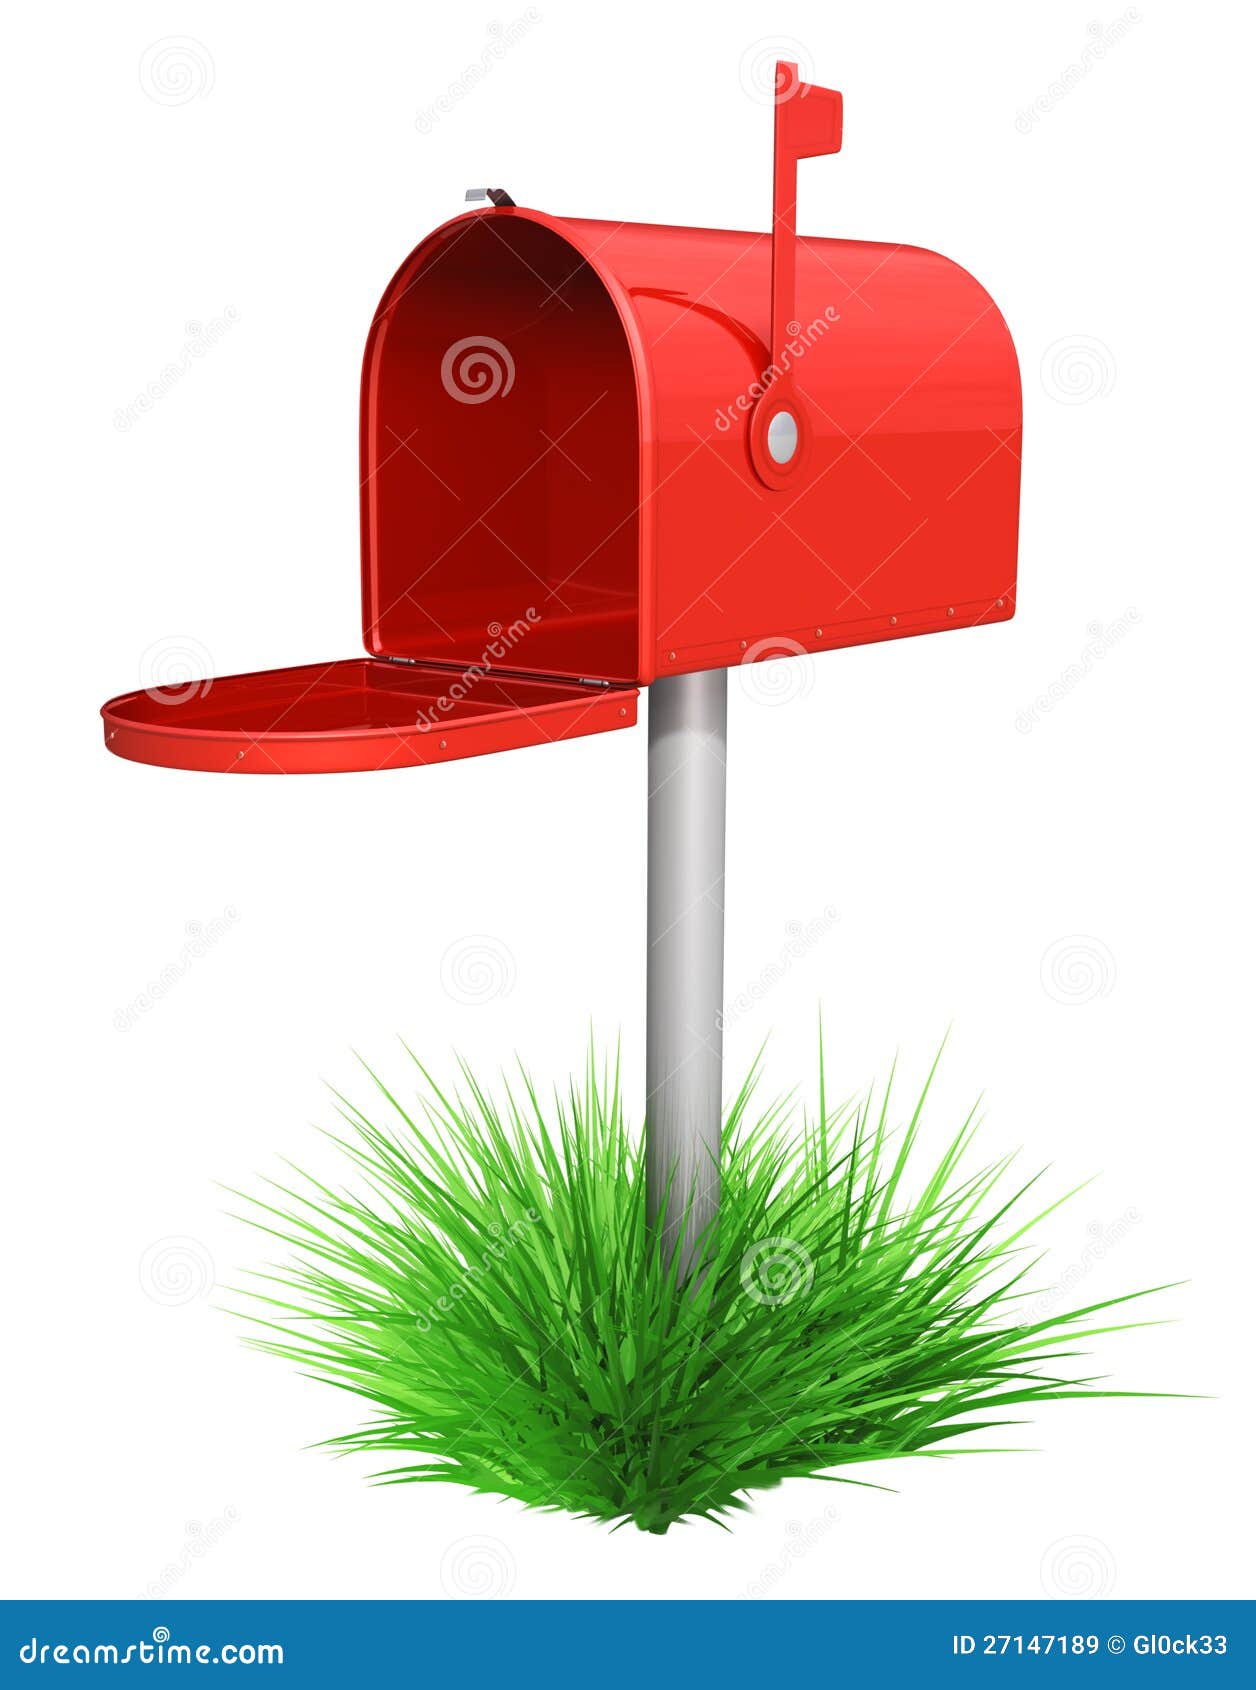 free animated mailbox clipart - photo #31